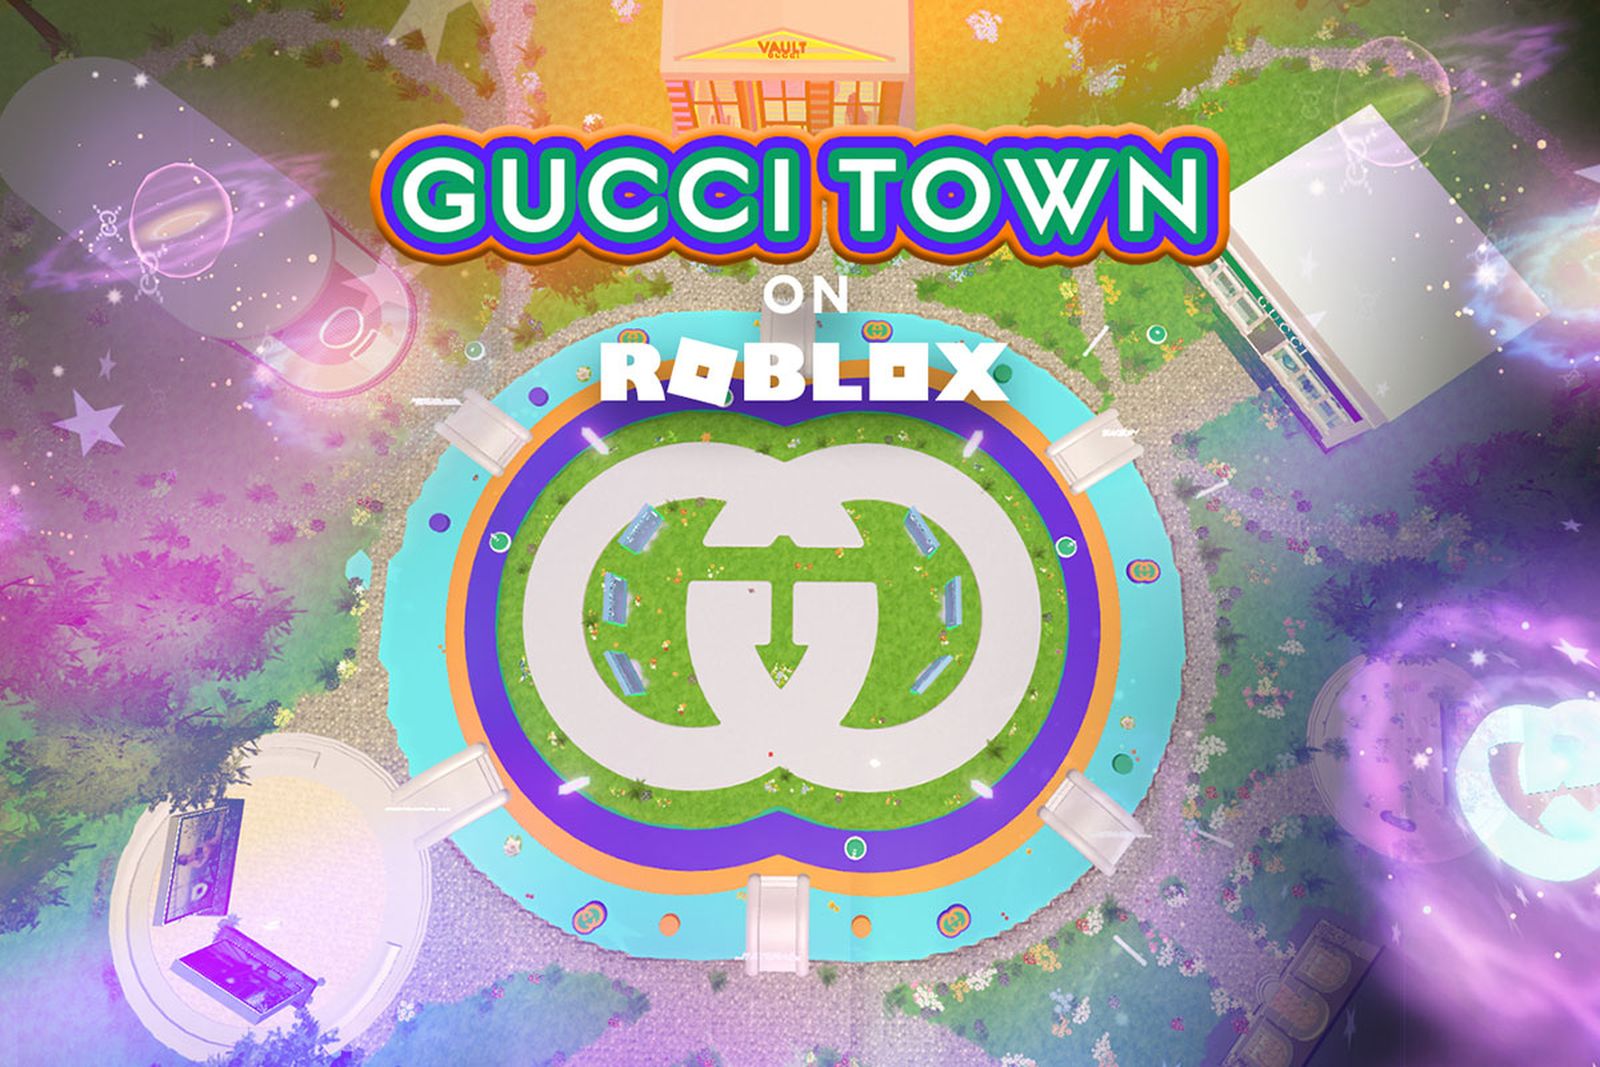 Gucci-town-Roblox-Jack-Grealish-15